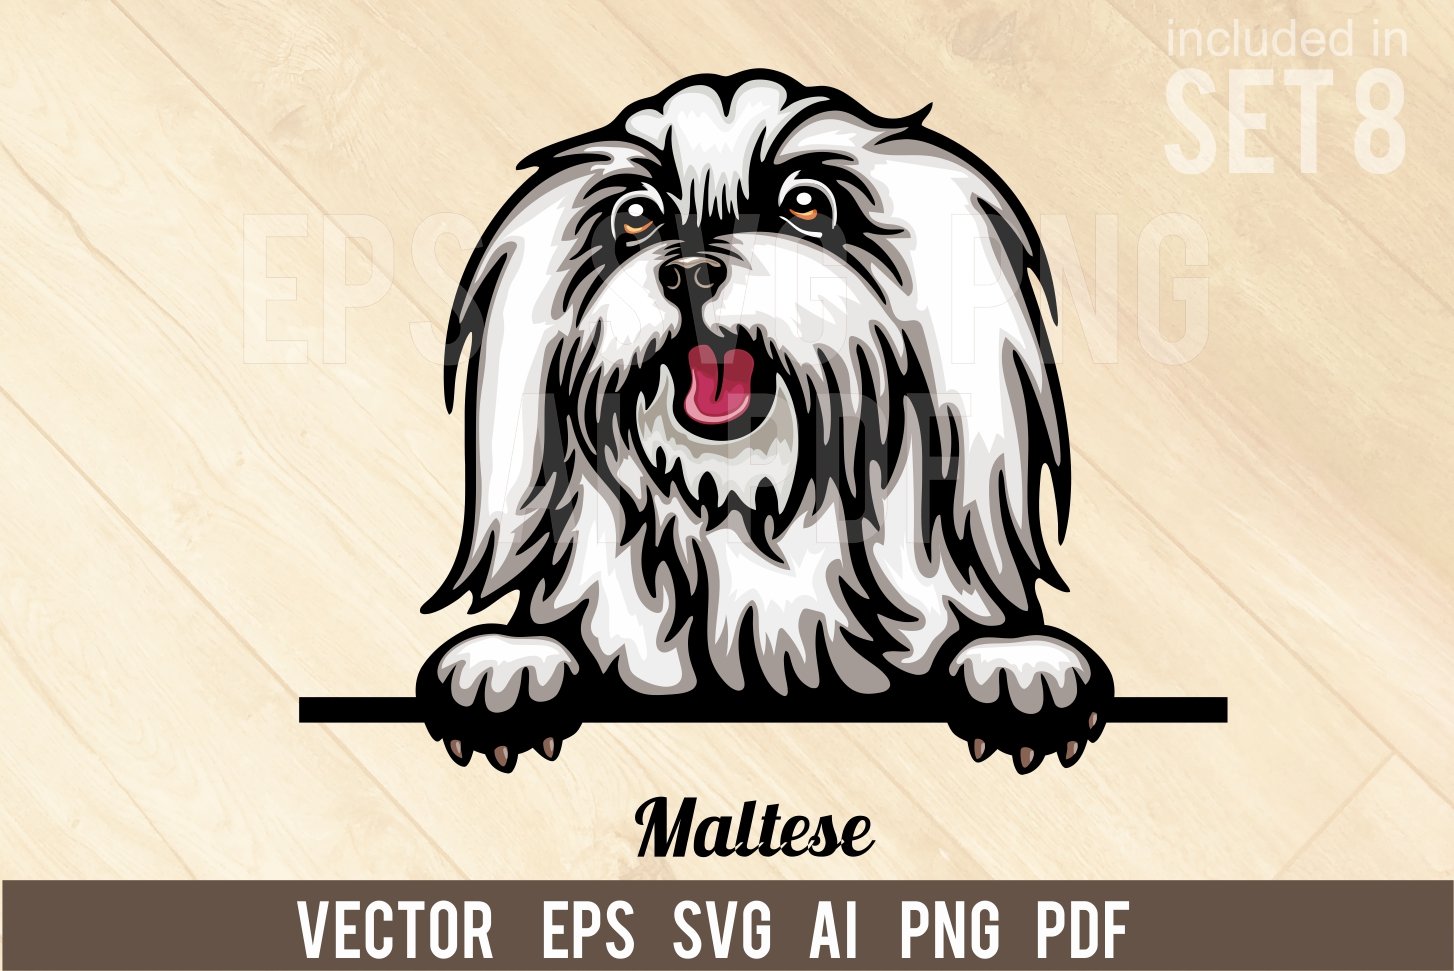 Maltese - Peeking Dog Color SVG cover image.